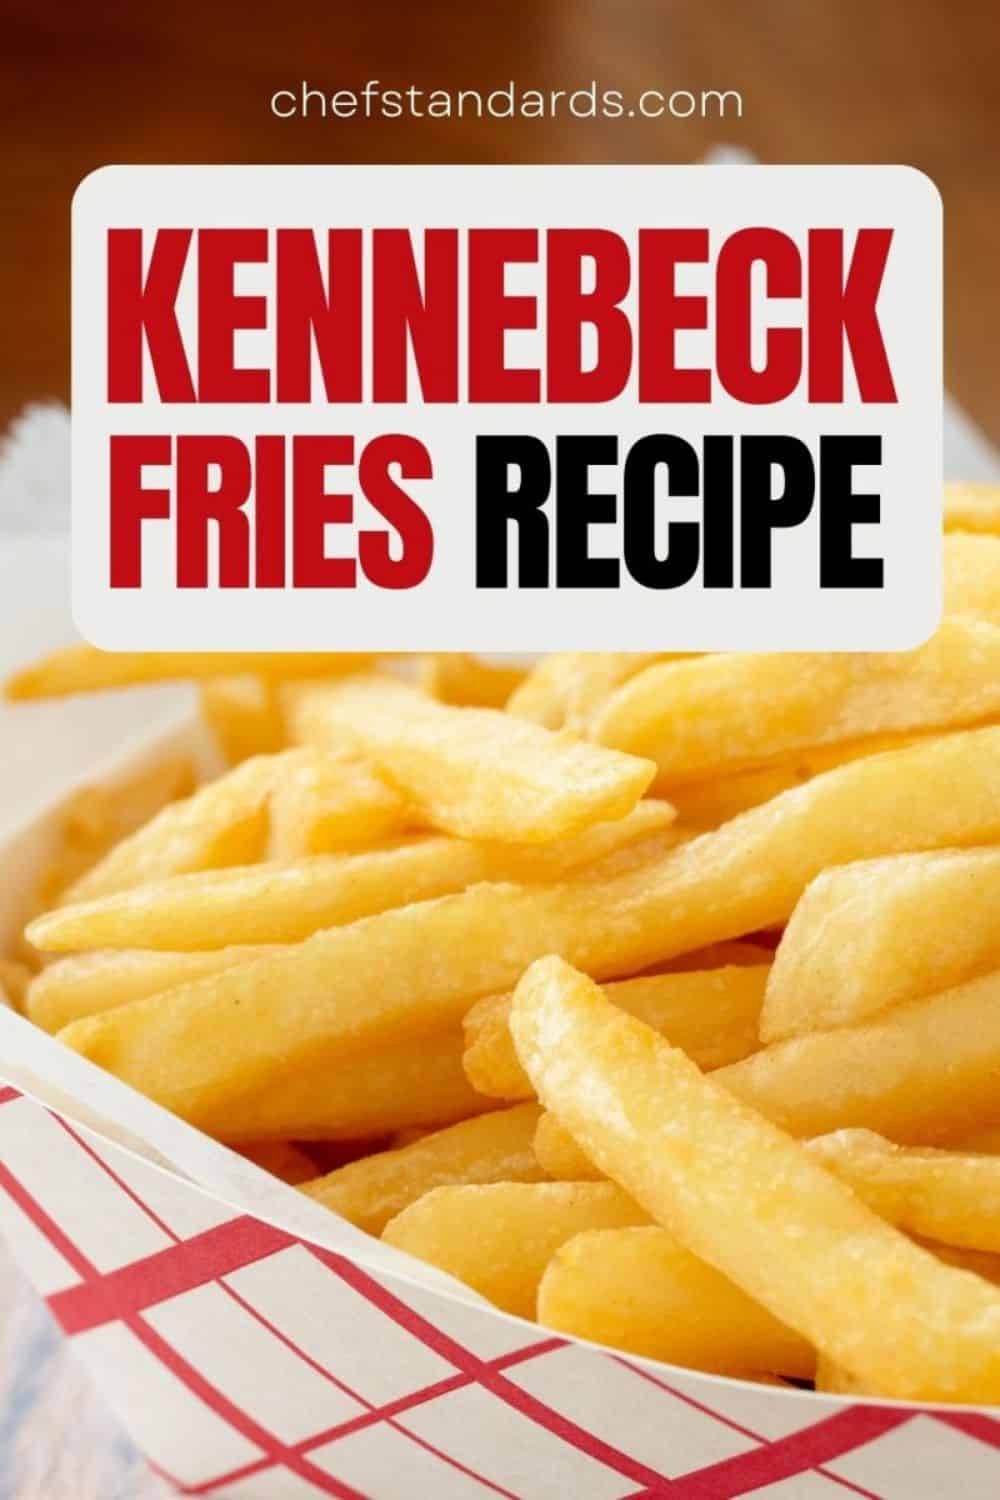 Crispy Kennebec Fries Recipe You Won't Stop Enjoying 